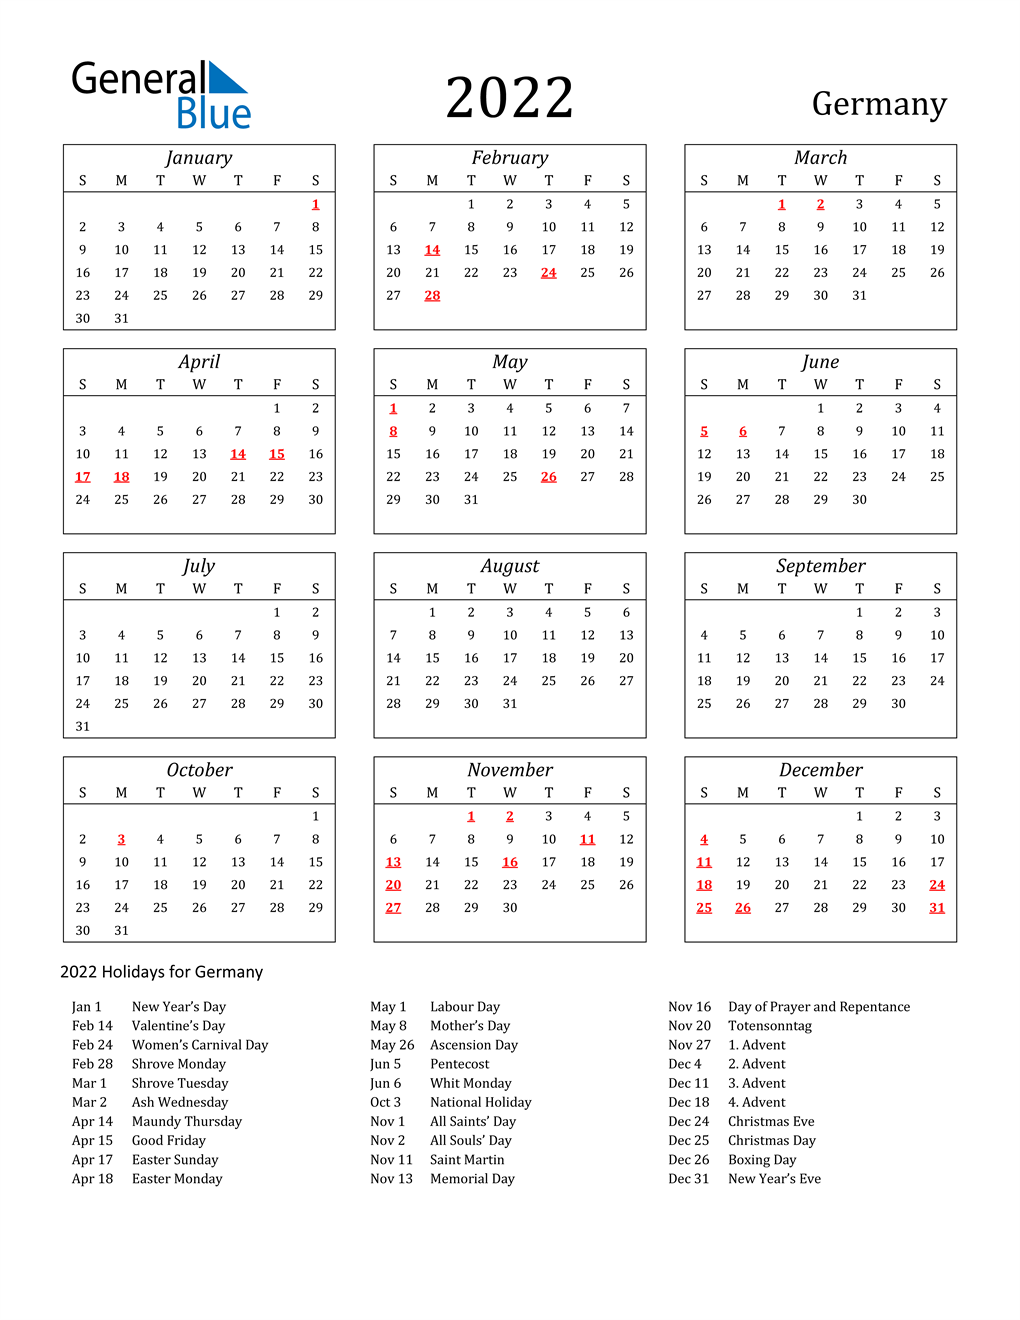 Trading Calendar 2022 2022 Germany Calendar With Holidays